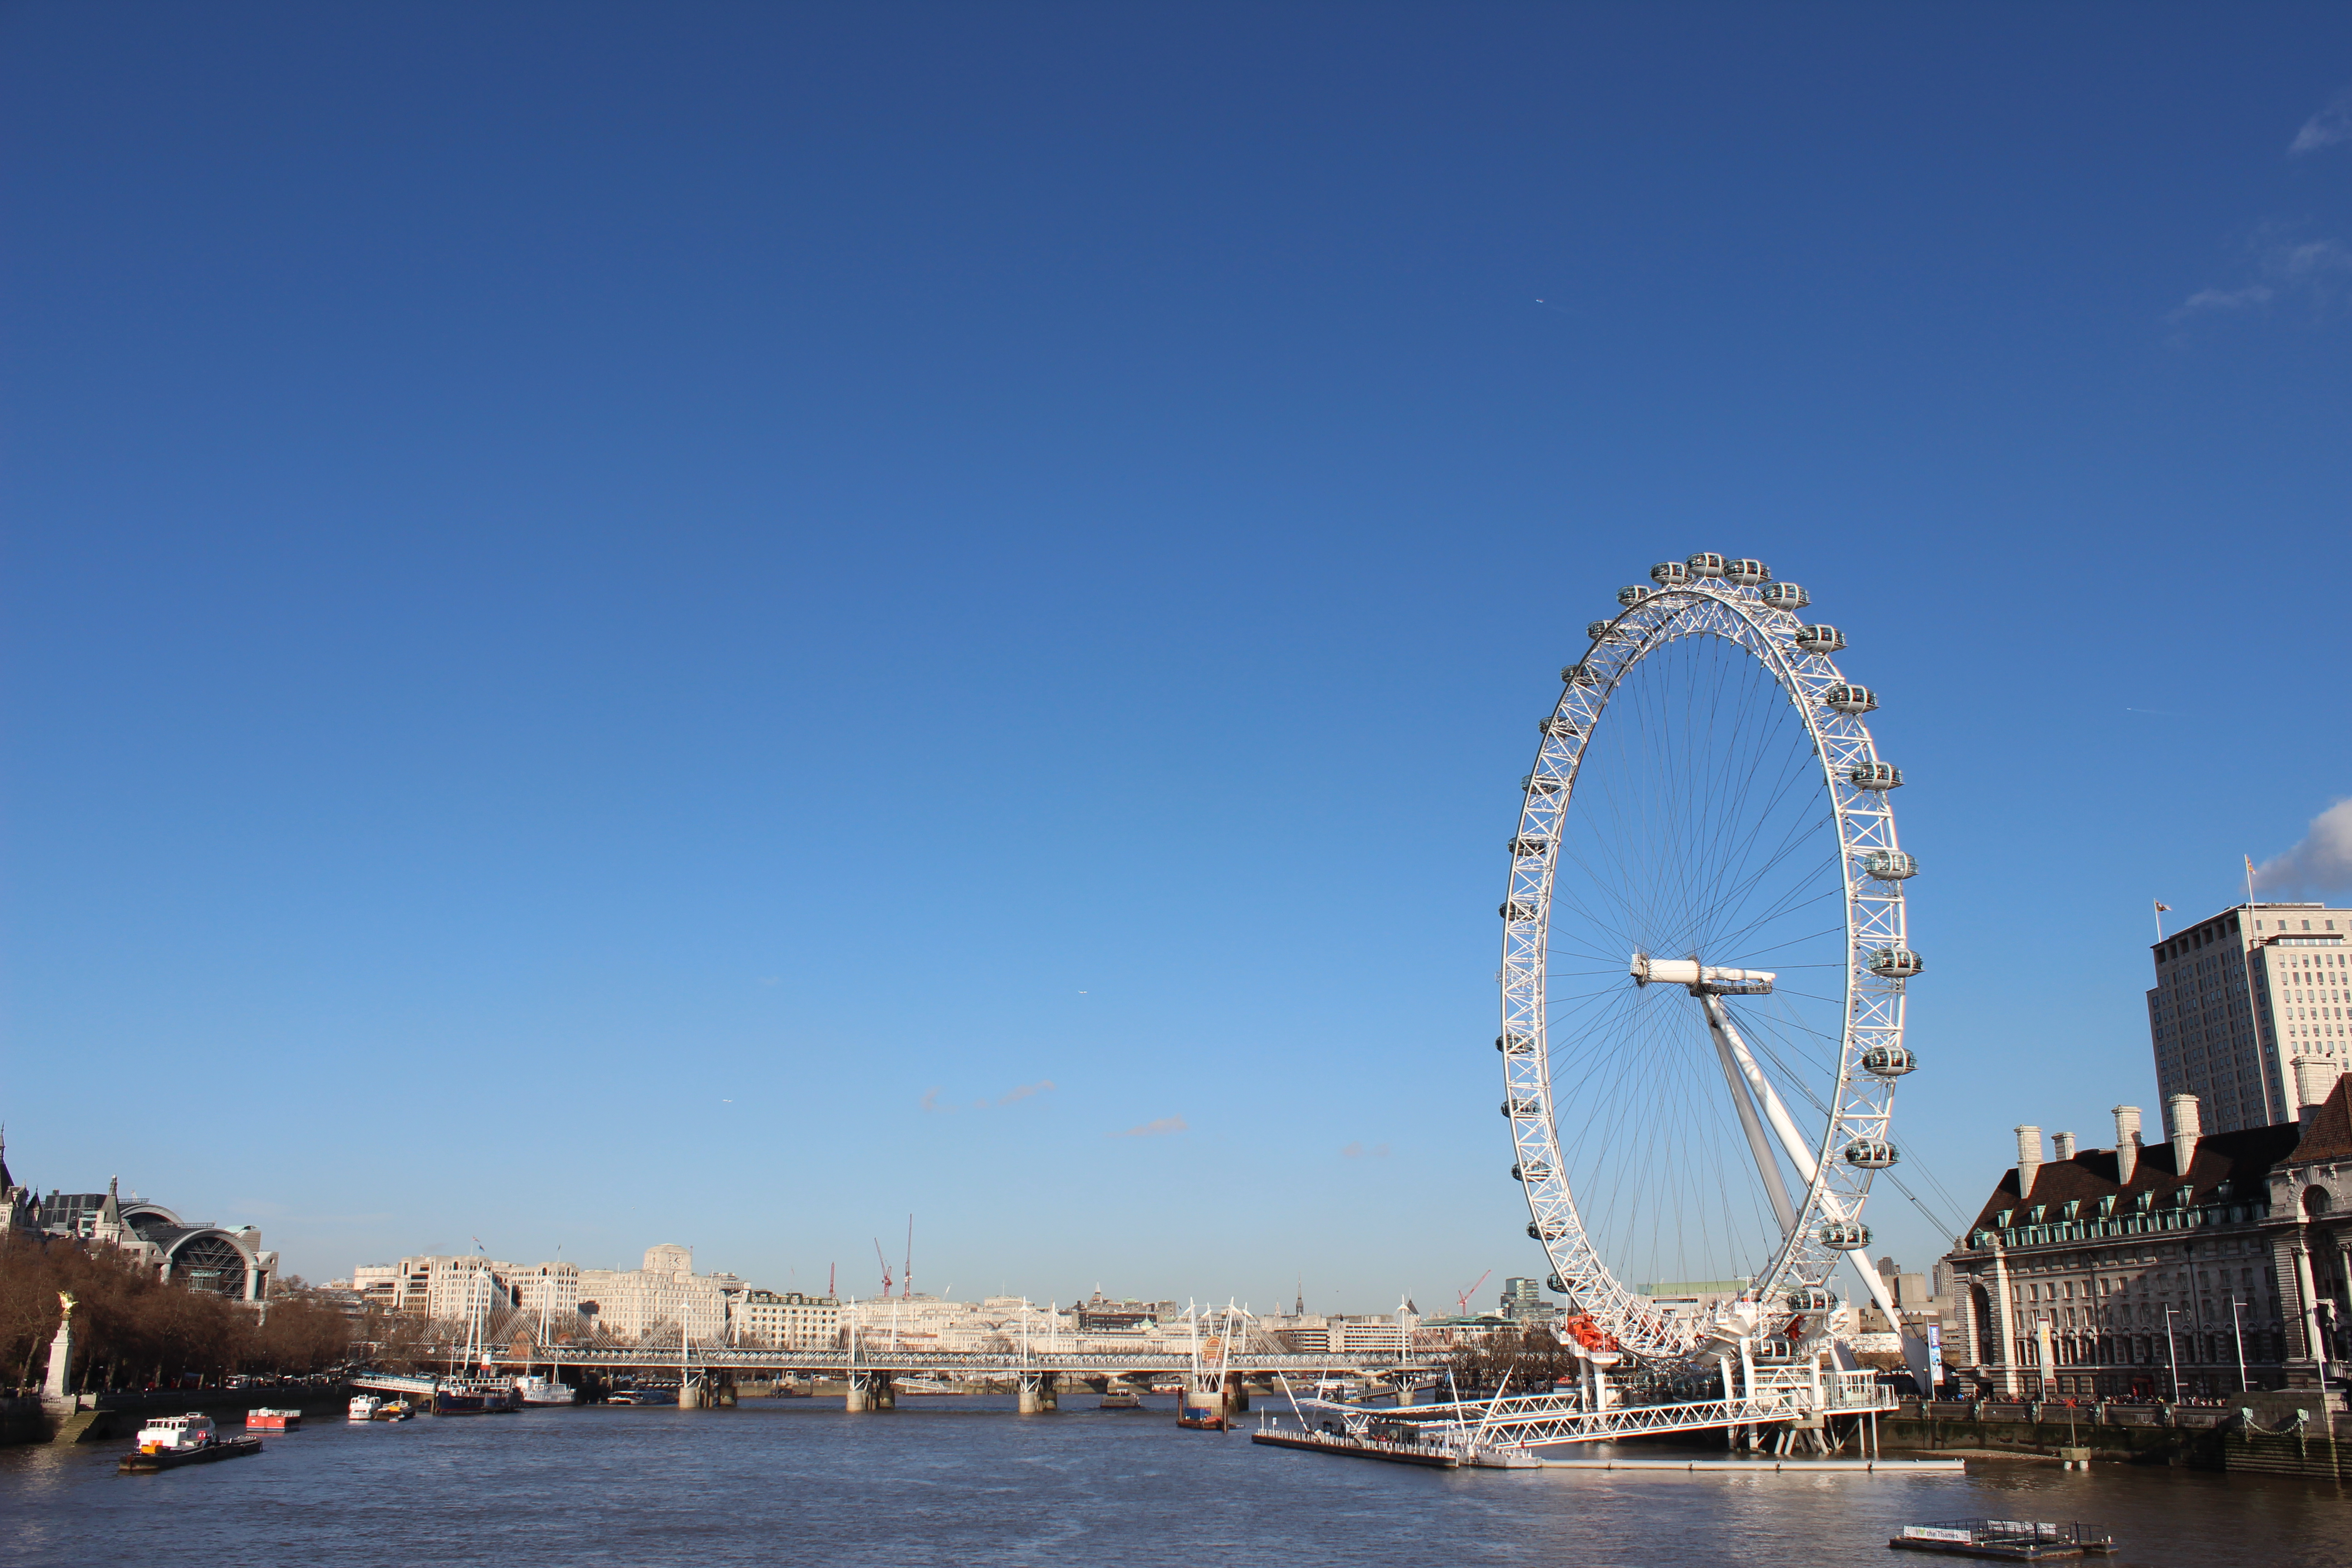 File:The london eye, central london.JPG - Wikimedia Commons